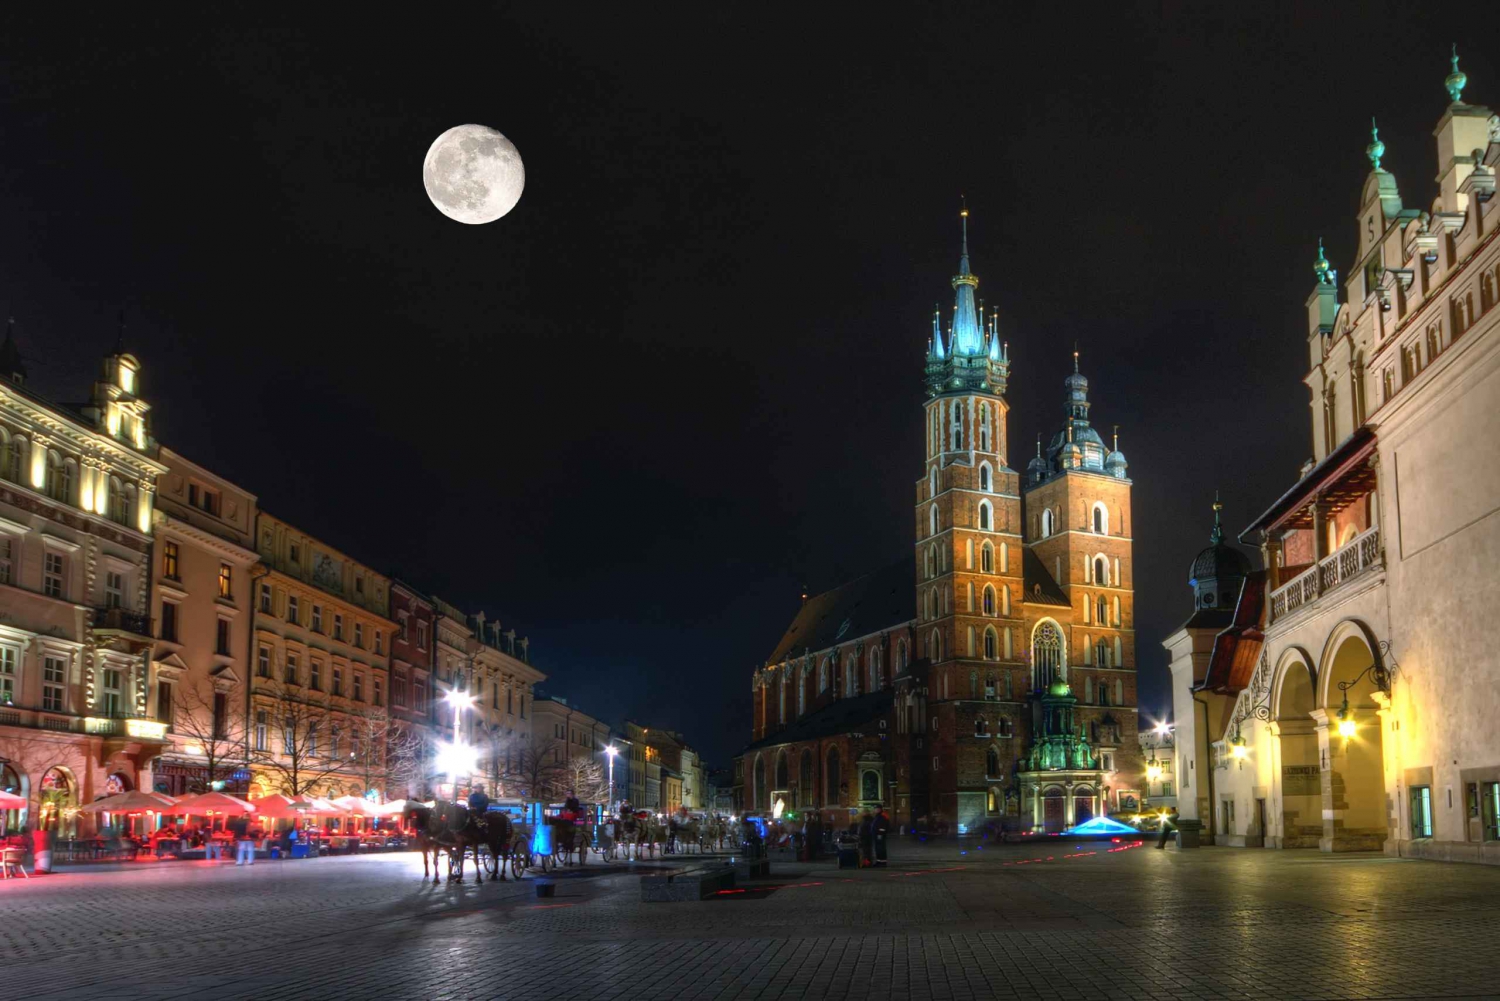 Krakow: Rynek Underground Guided Tour with Skip-the-Line